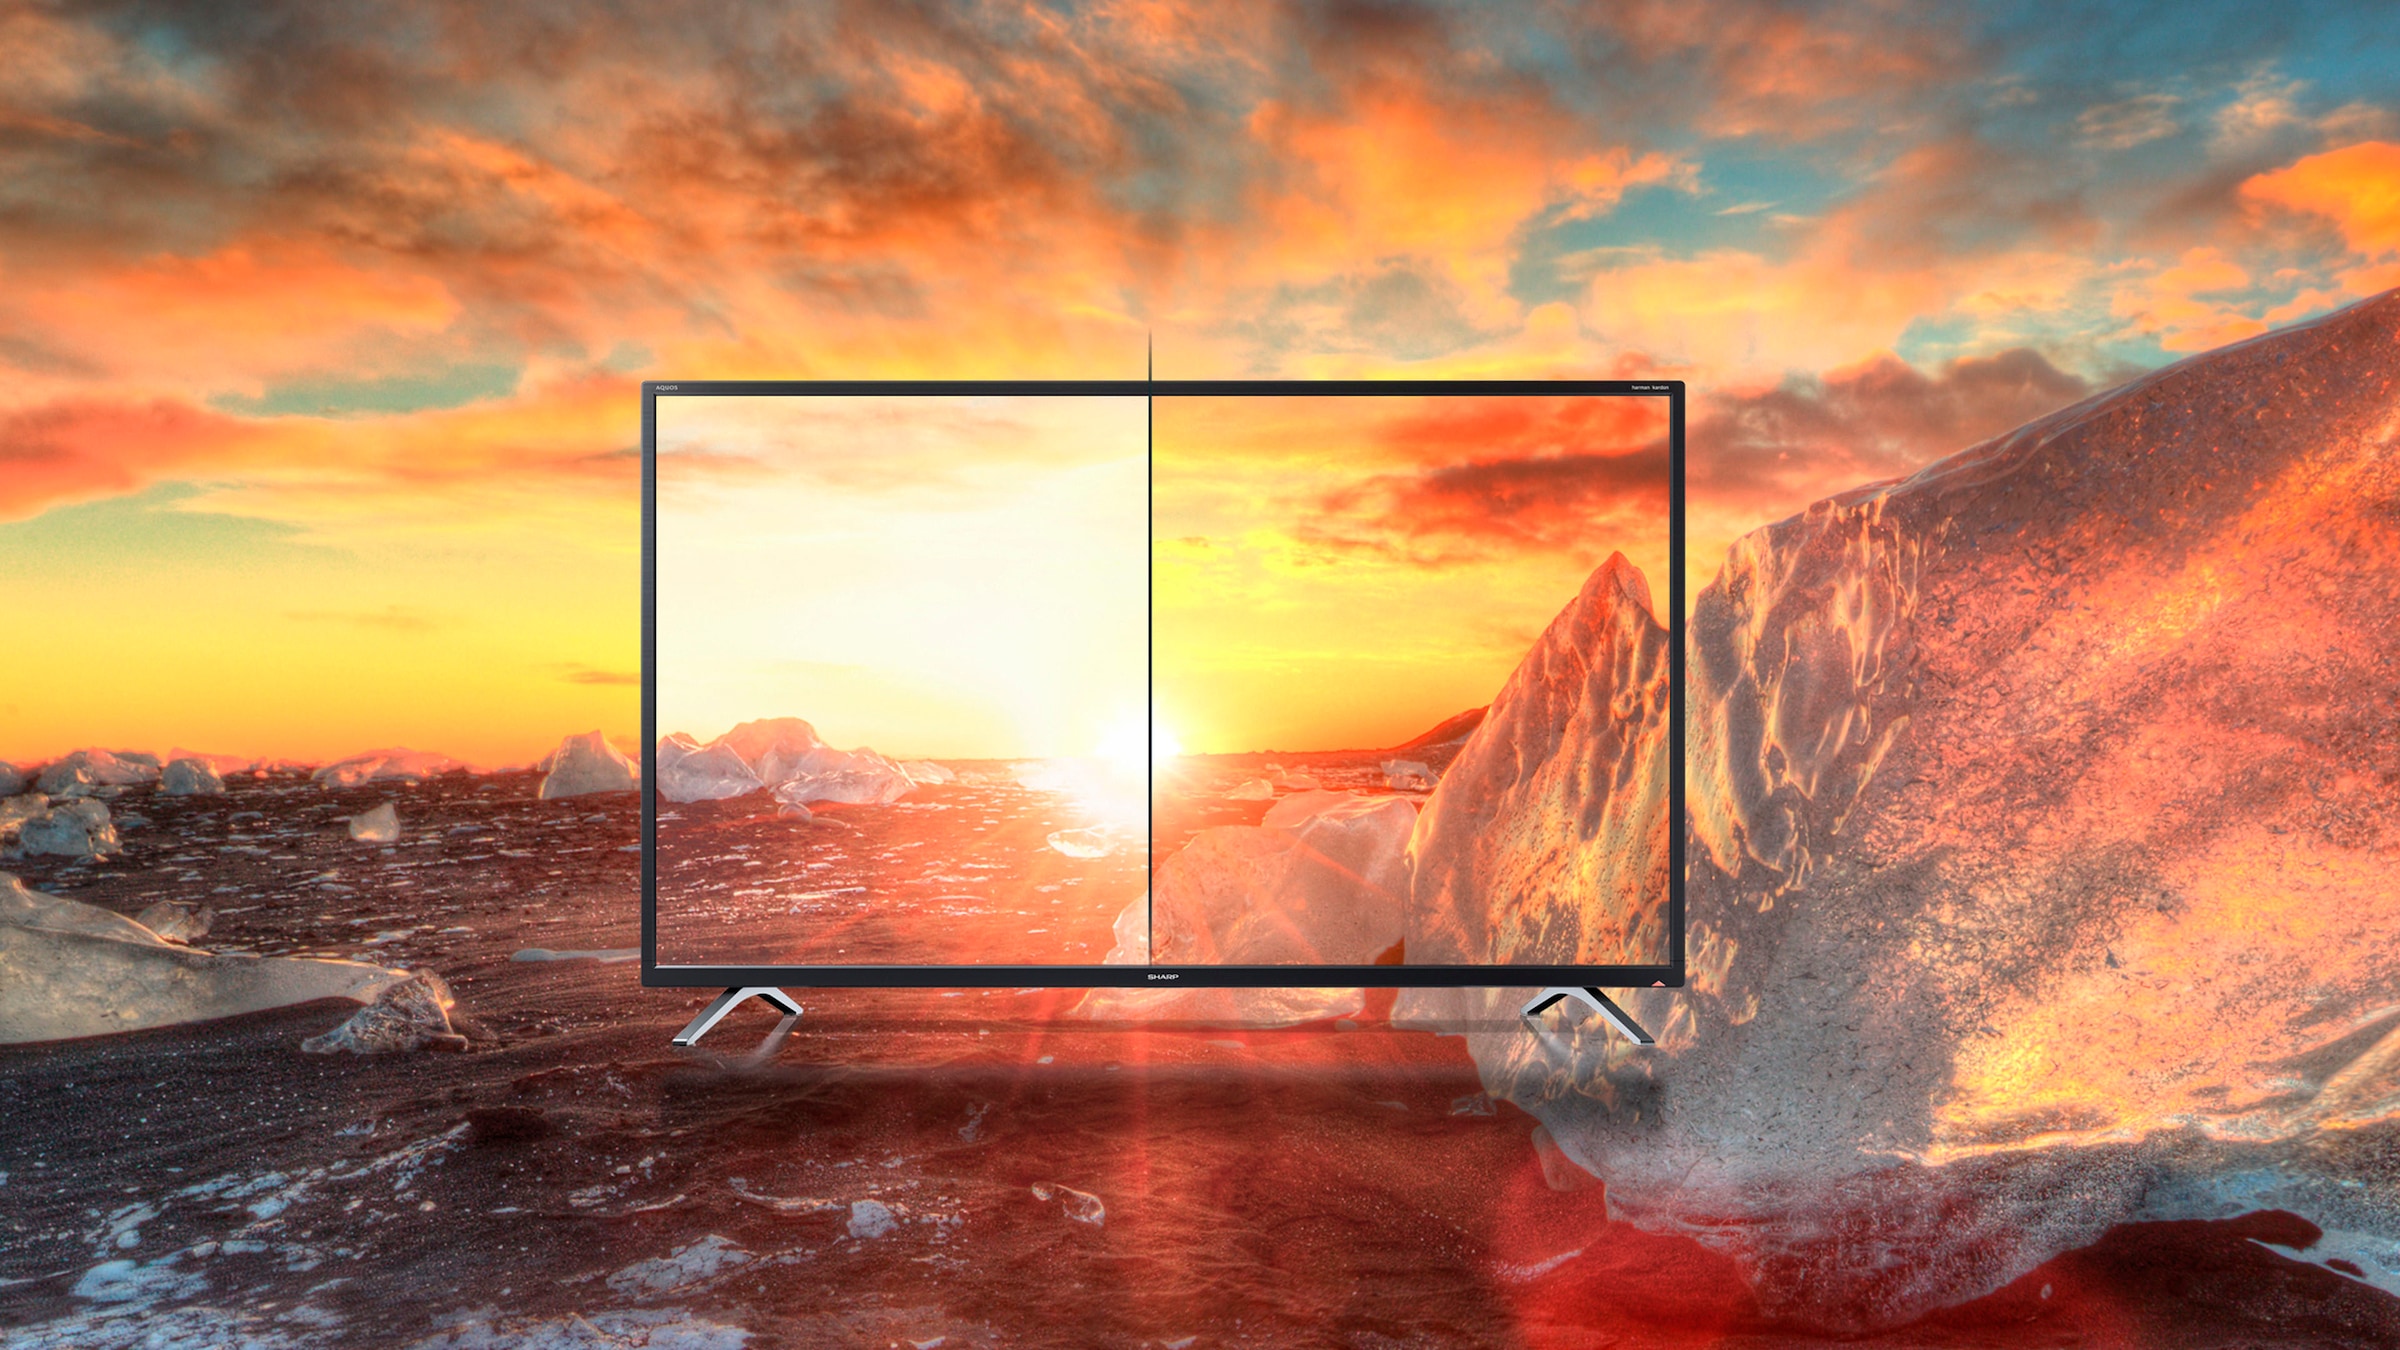 Sharp LED-Fernseher, 177 cm/70 Zoll, 4K Ultra HD, Android TV-Smart-TV